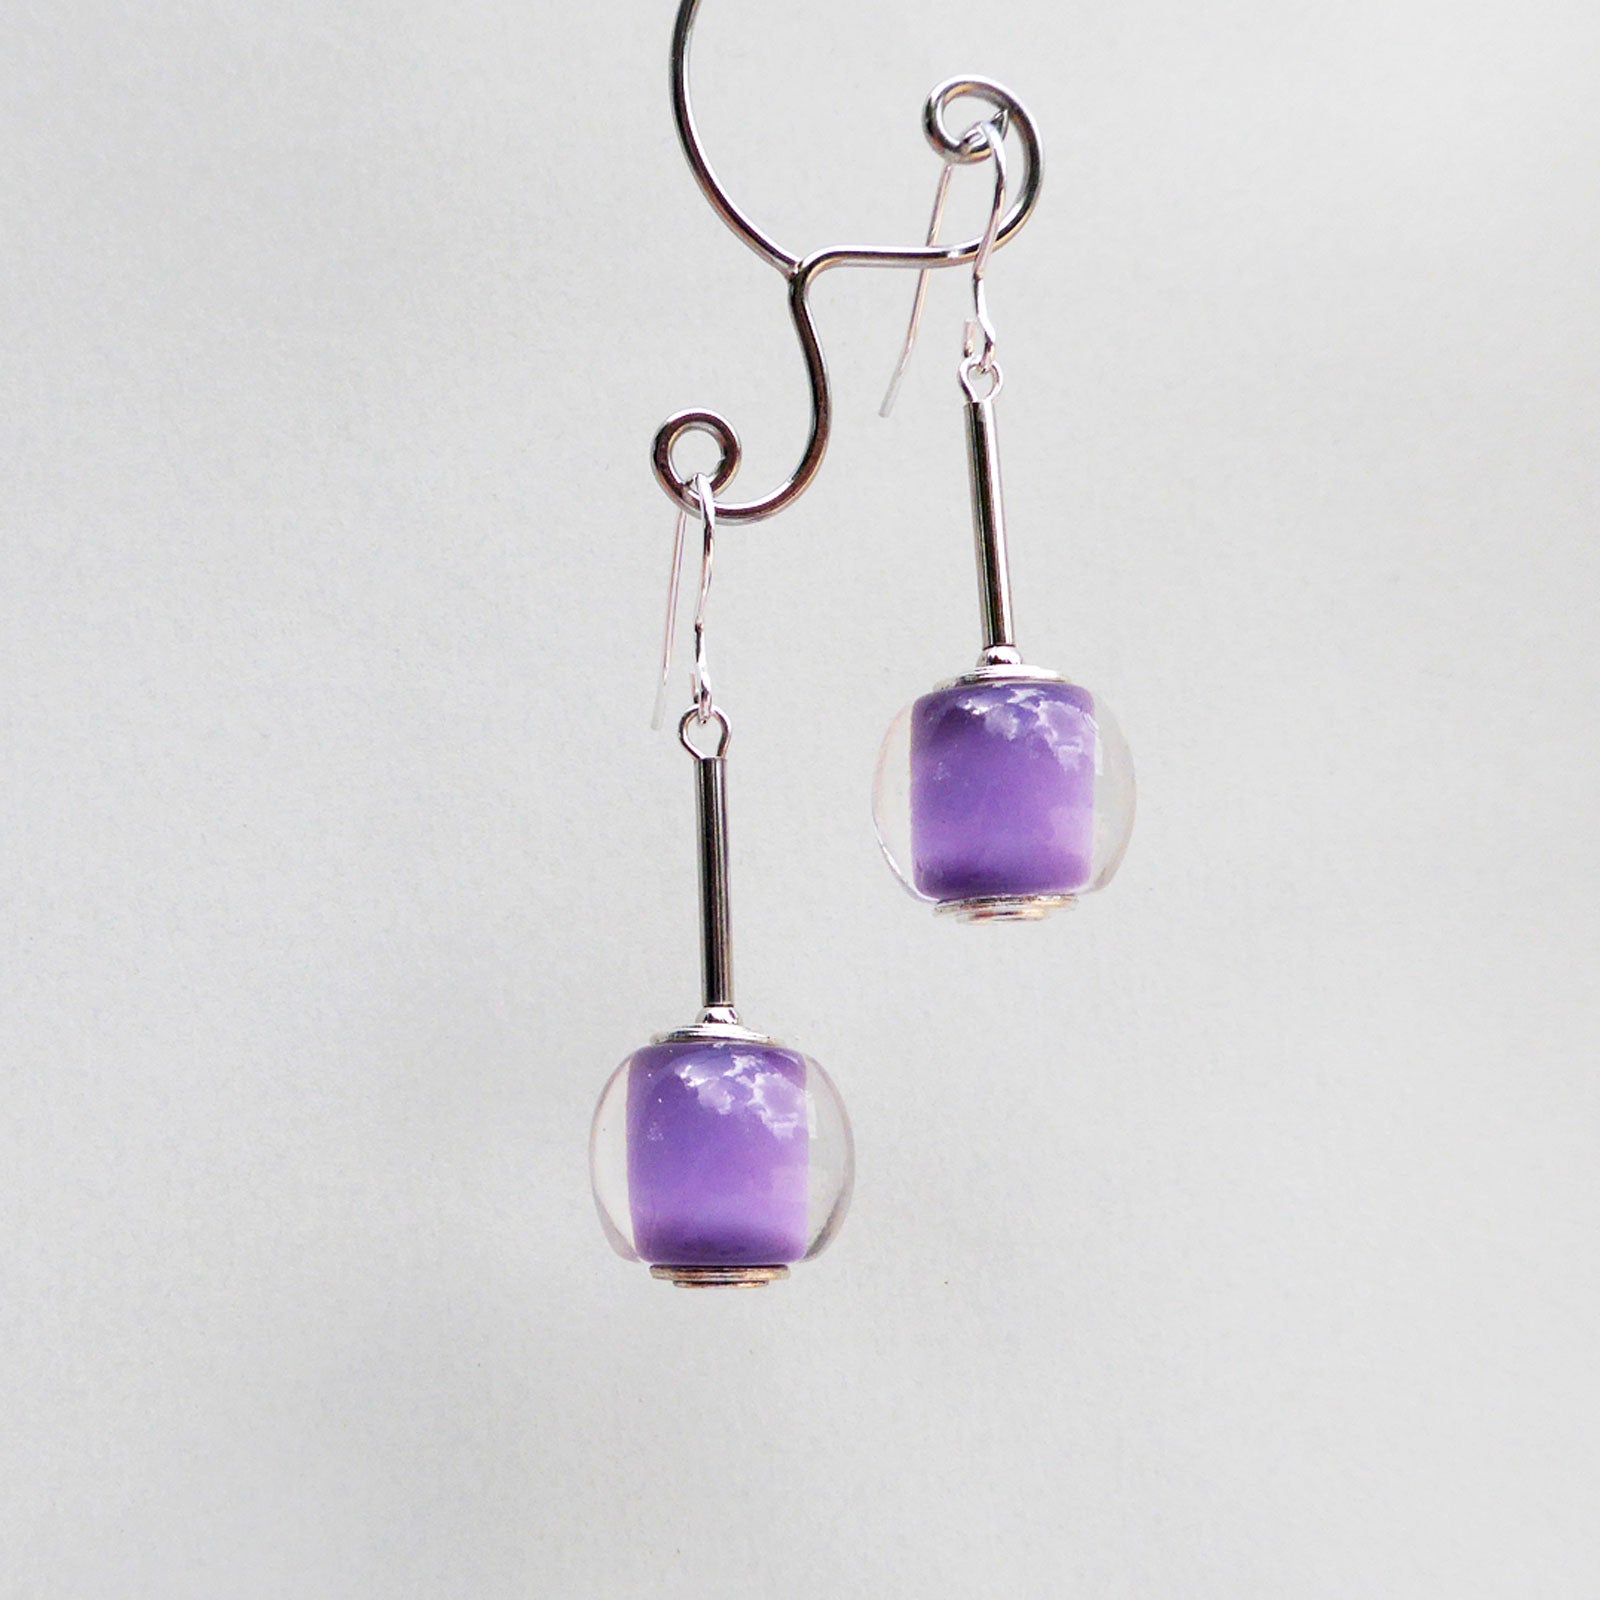 Lavender Zsiska long drop earrings